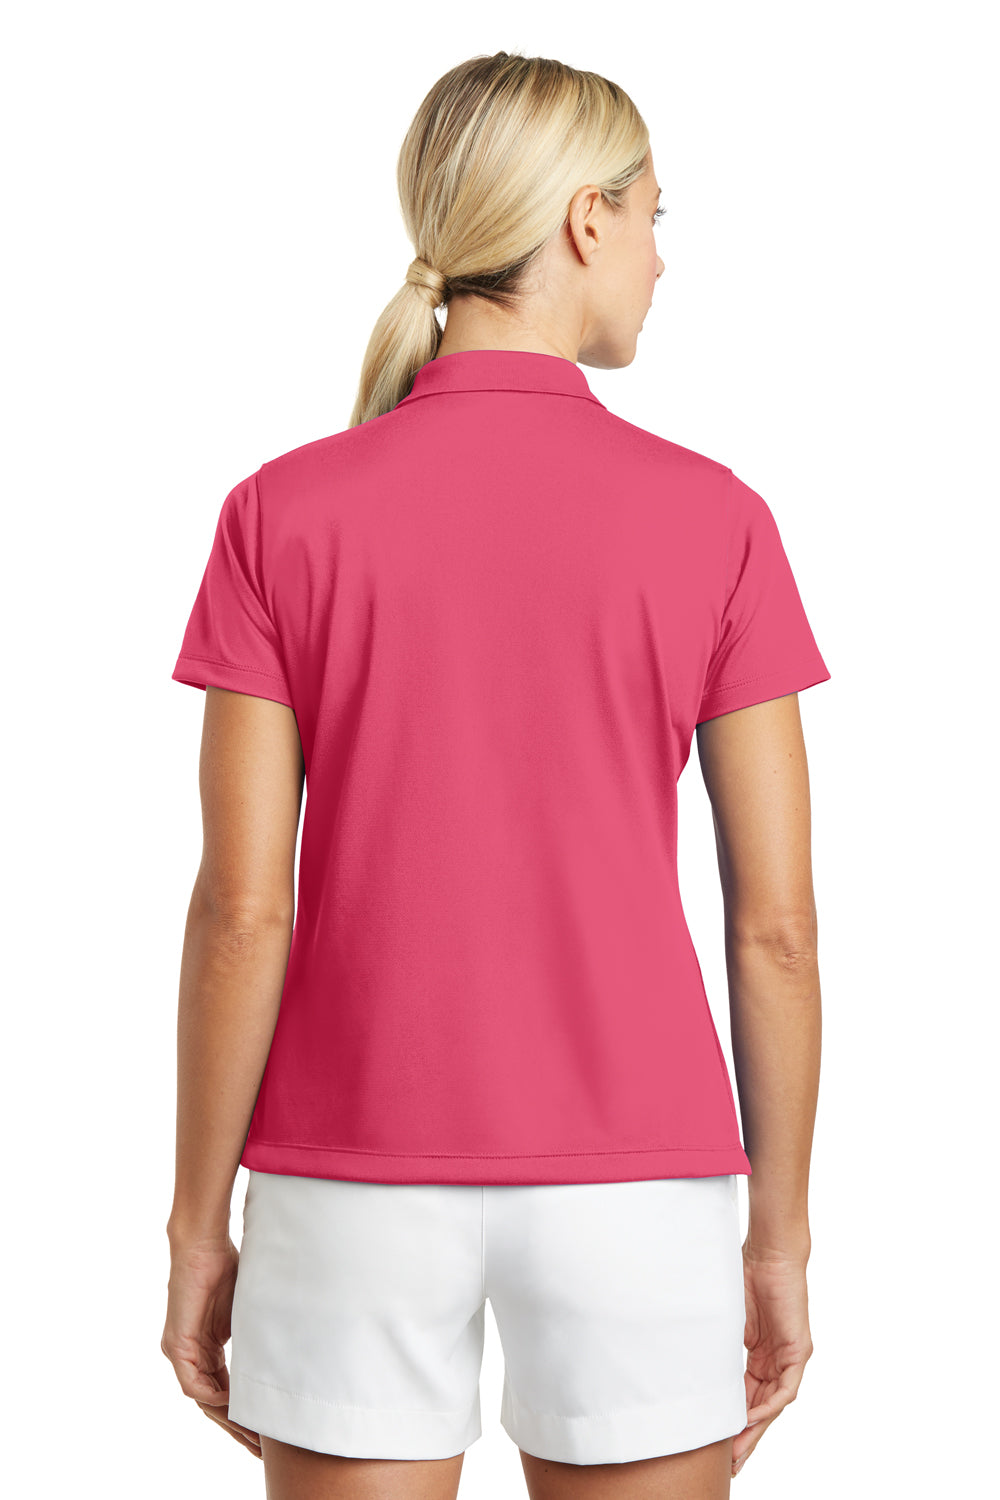 Nike 203697 Womens Tech Basic Dri-Fit Moisture Wicking Short Sleeve Polo Shirt Flamingo Pink Model Back